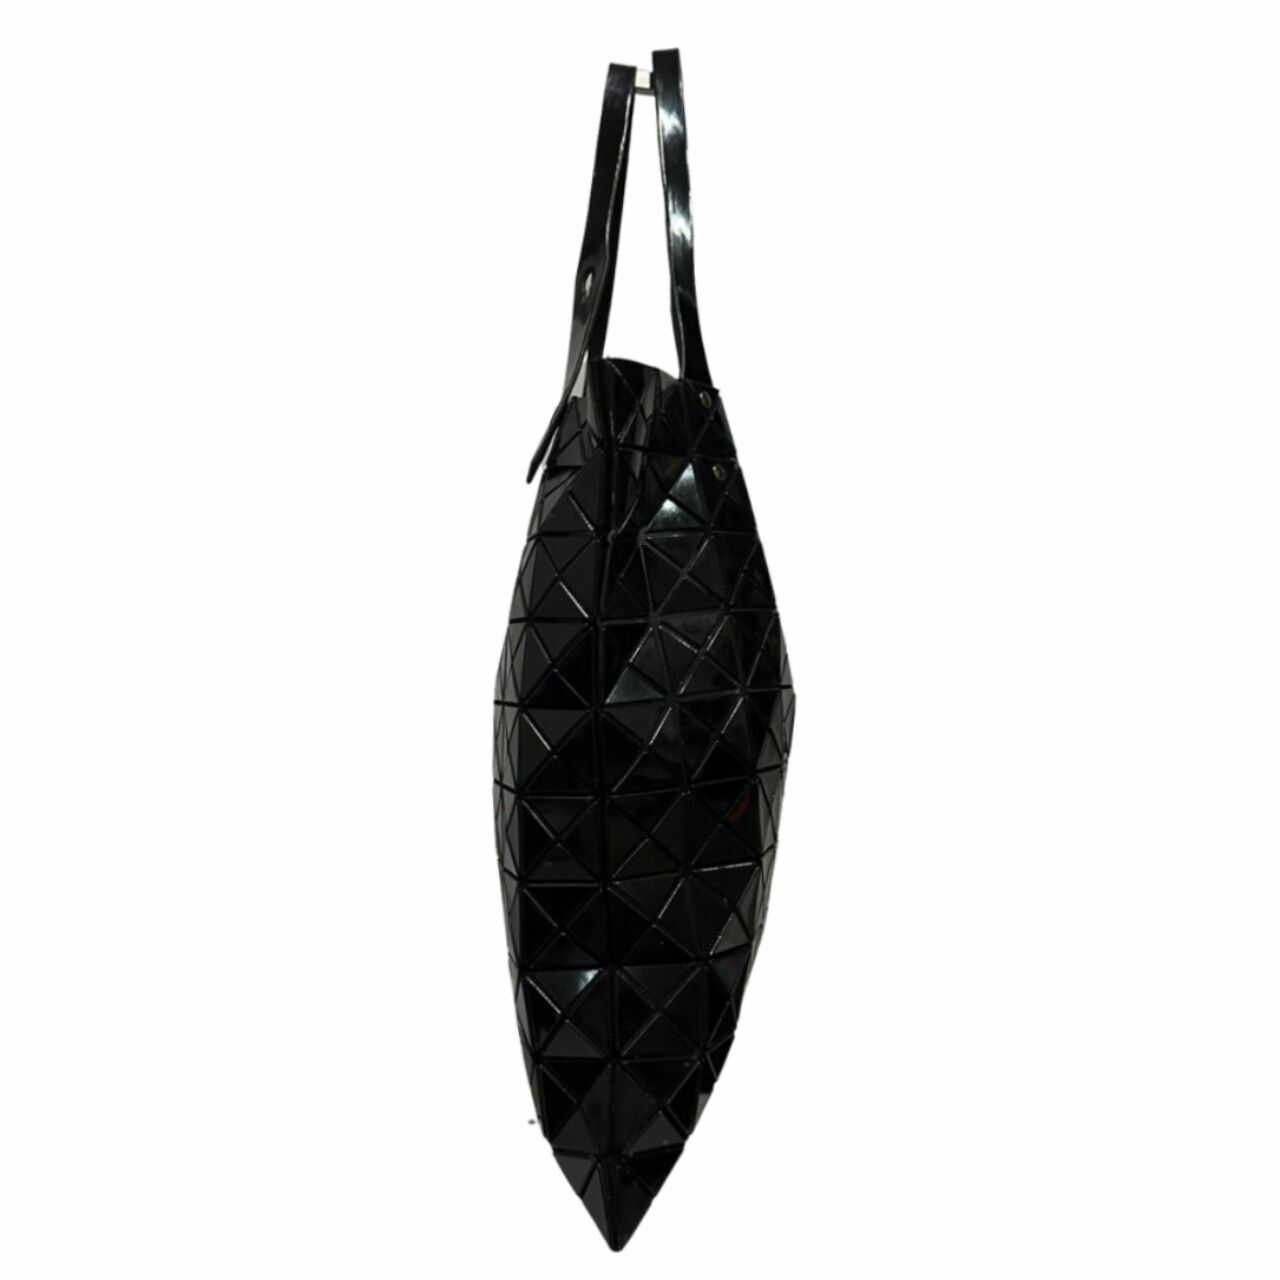 Issey Miyake Bao Bao Large Black Tote Bag